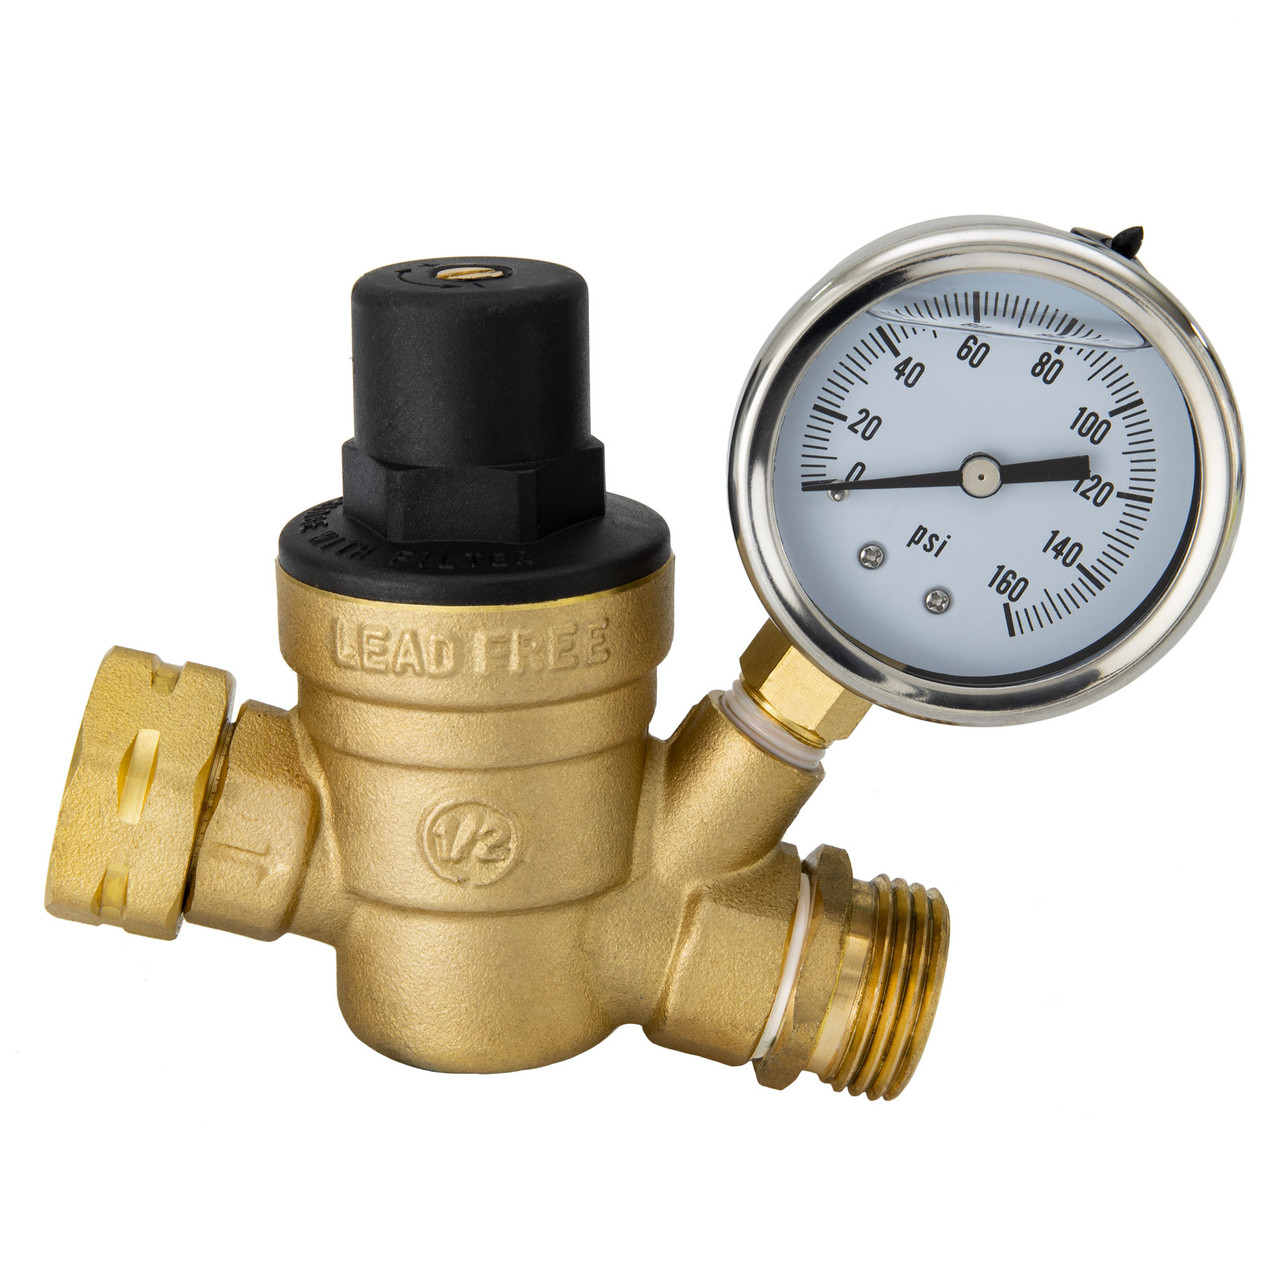 RecPro RV Brass Water Pressure Regulator with Gauge